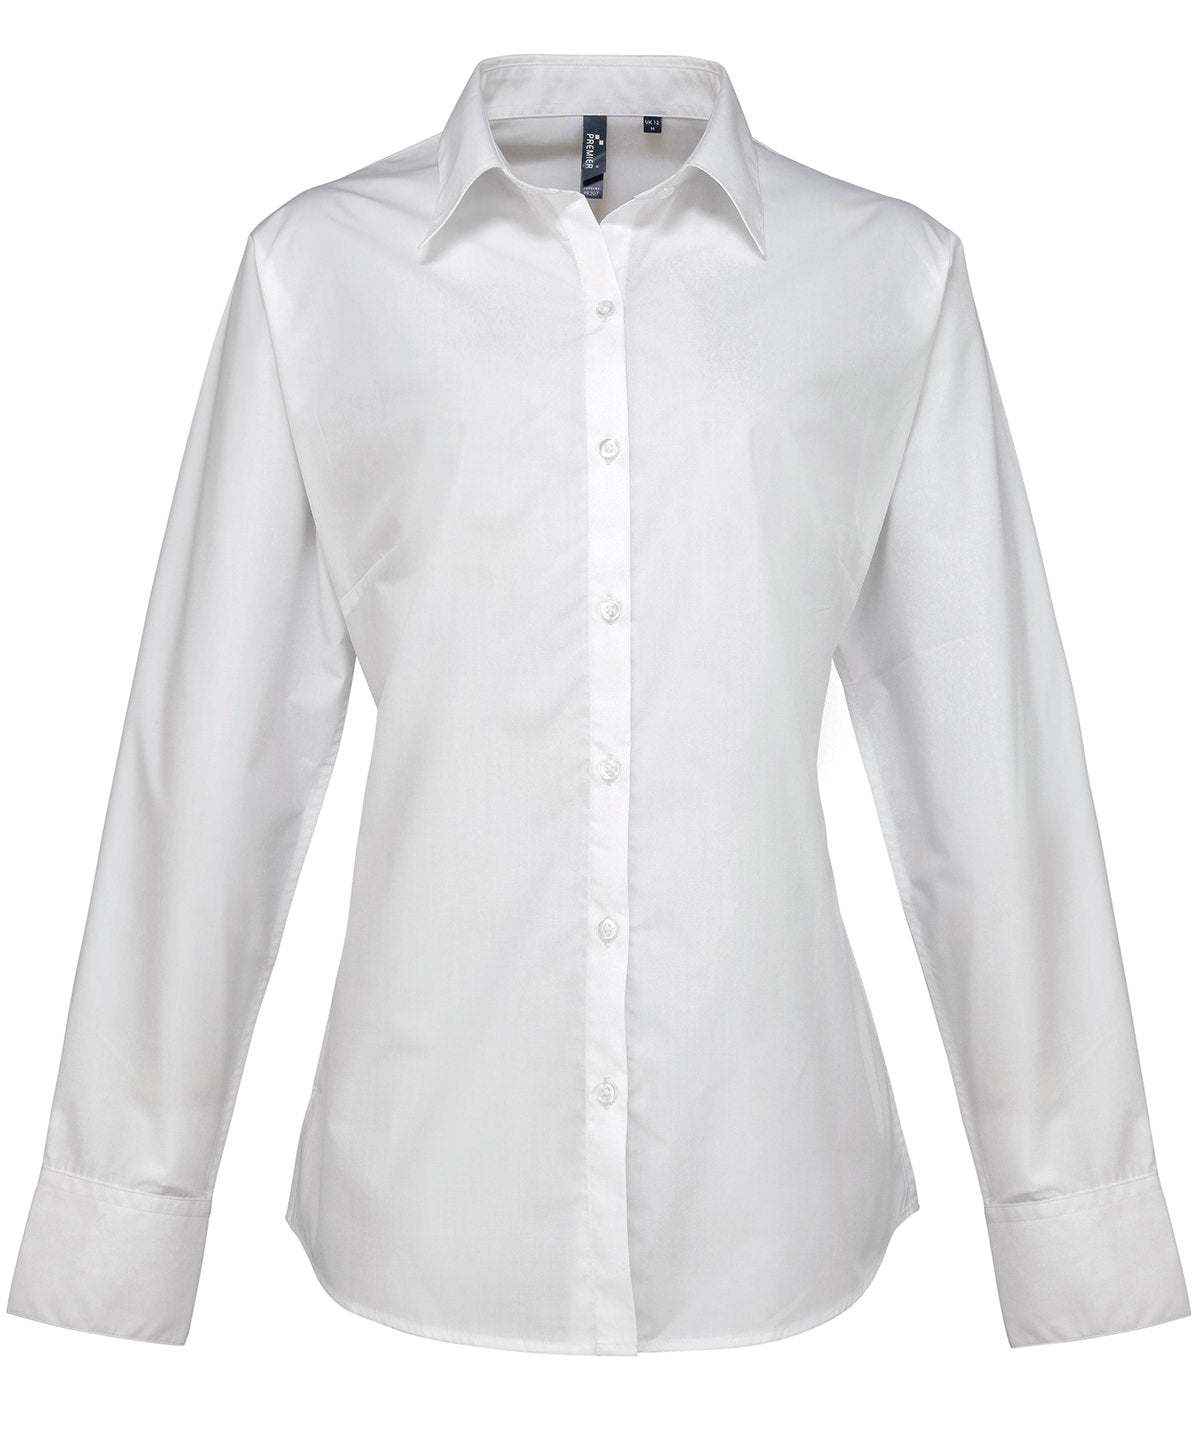 Bolir - Women's Supreme Poplin Long Sleeve Shirt